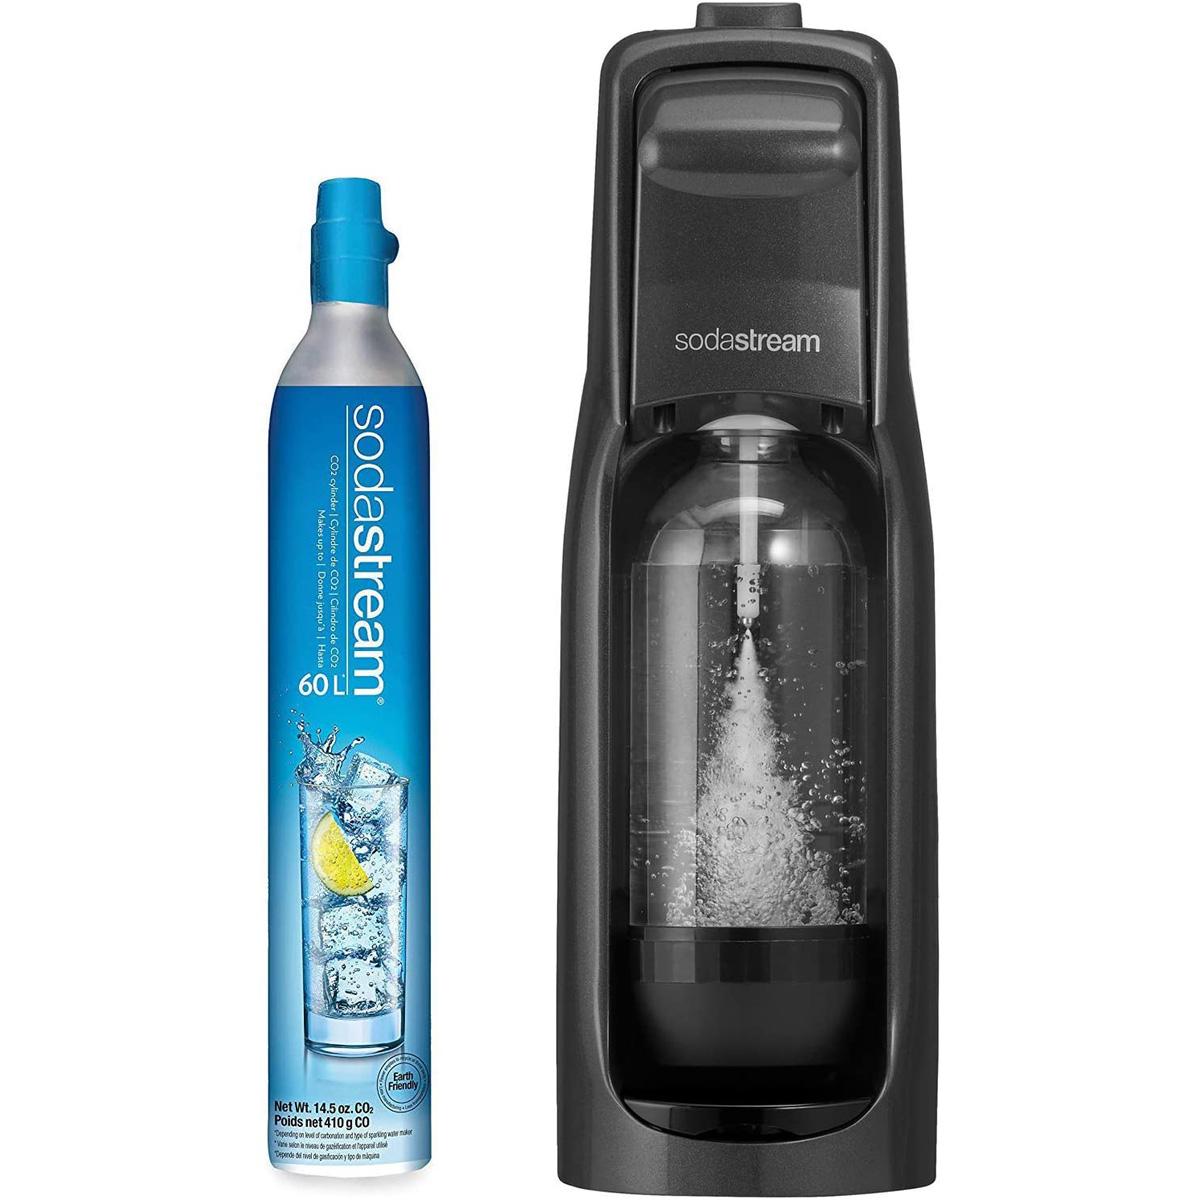 SodaStream Jet Sparkling Water Maker for $59.99 Shipped